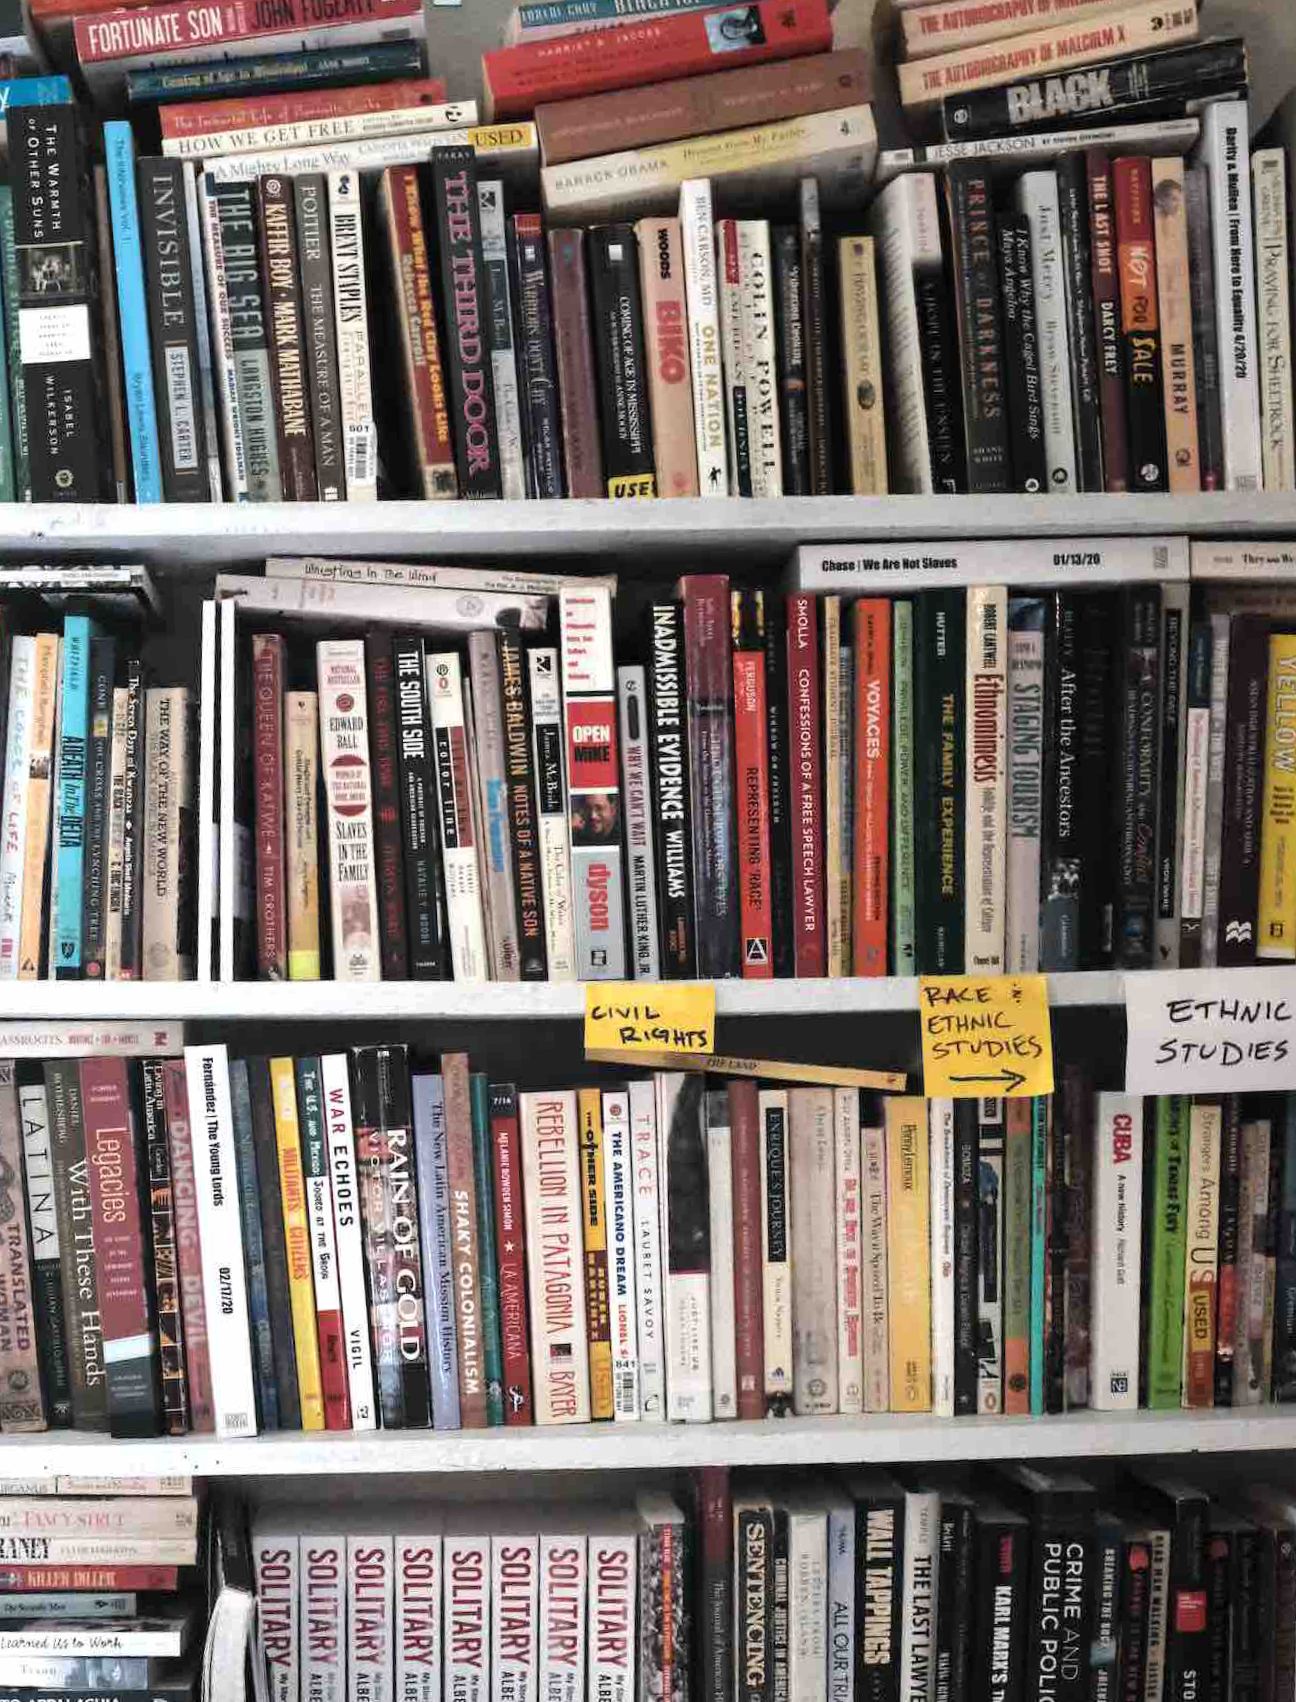 Image of a crowded bookshelf.